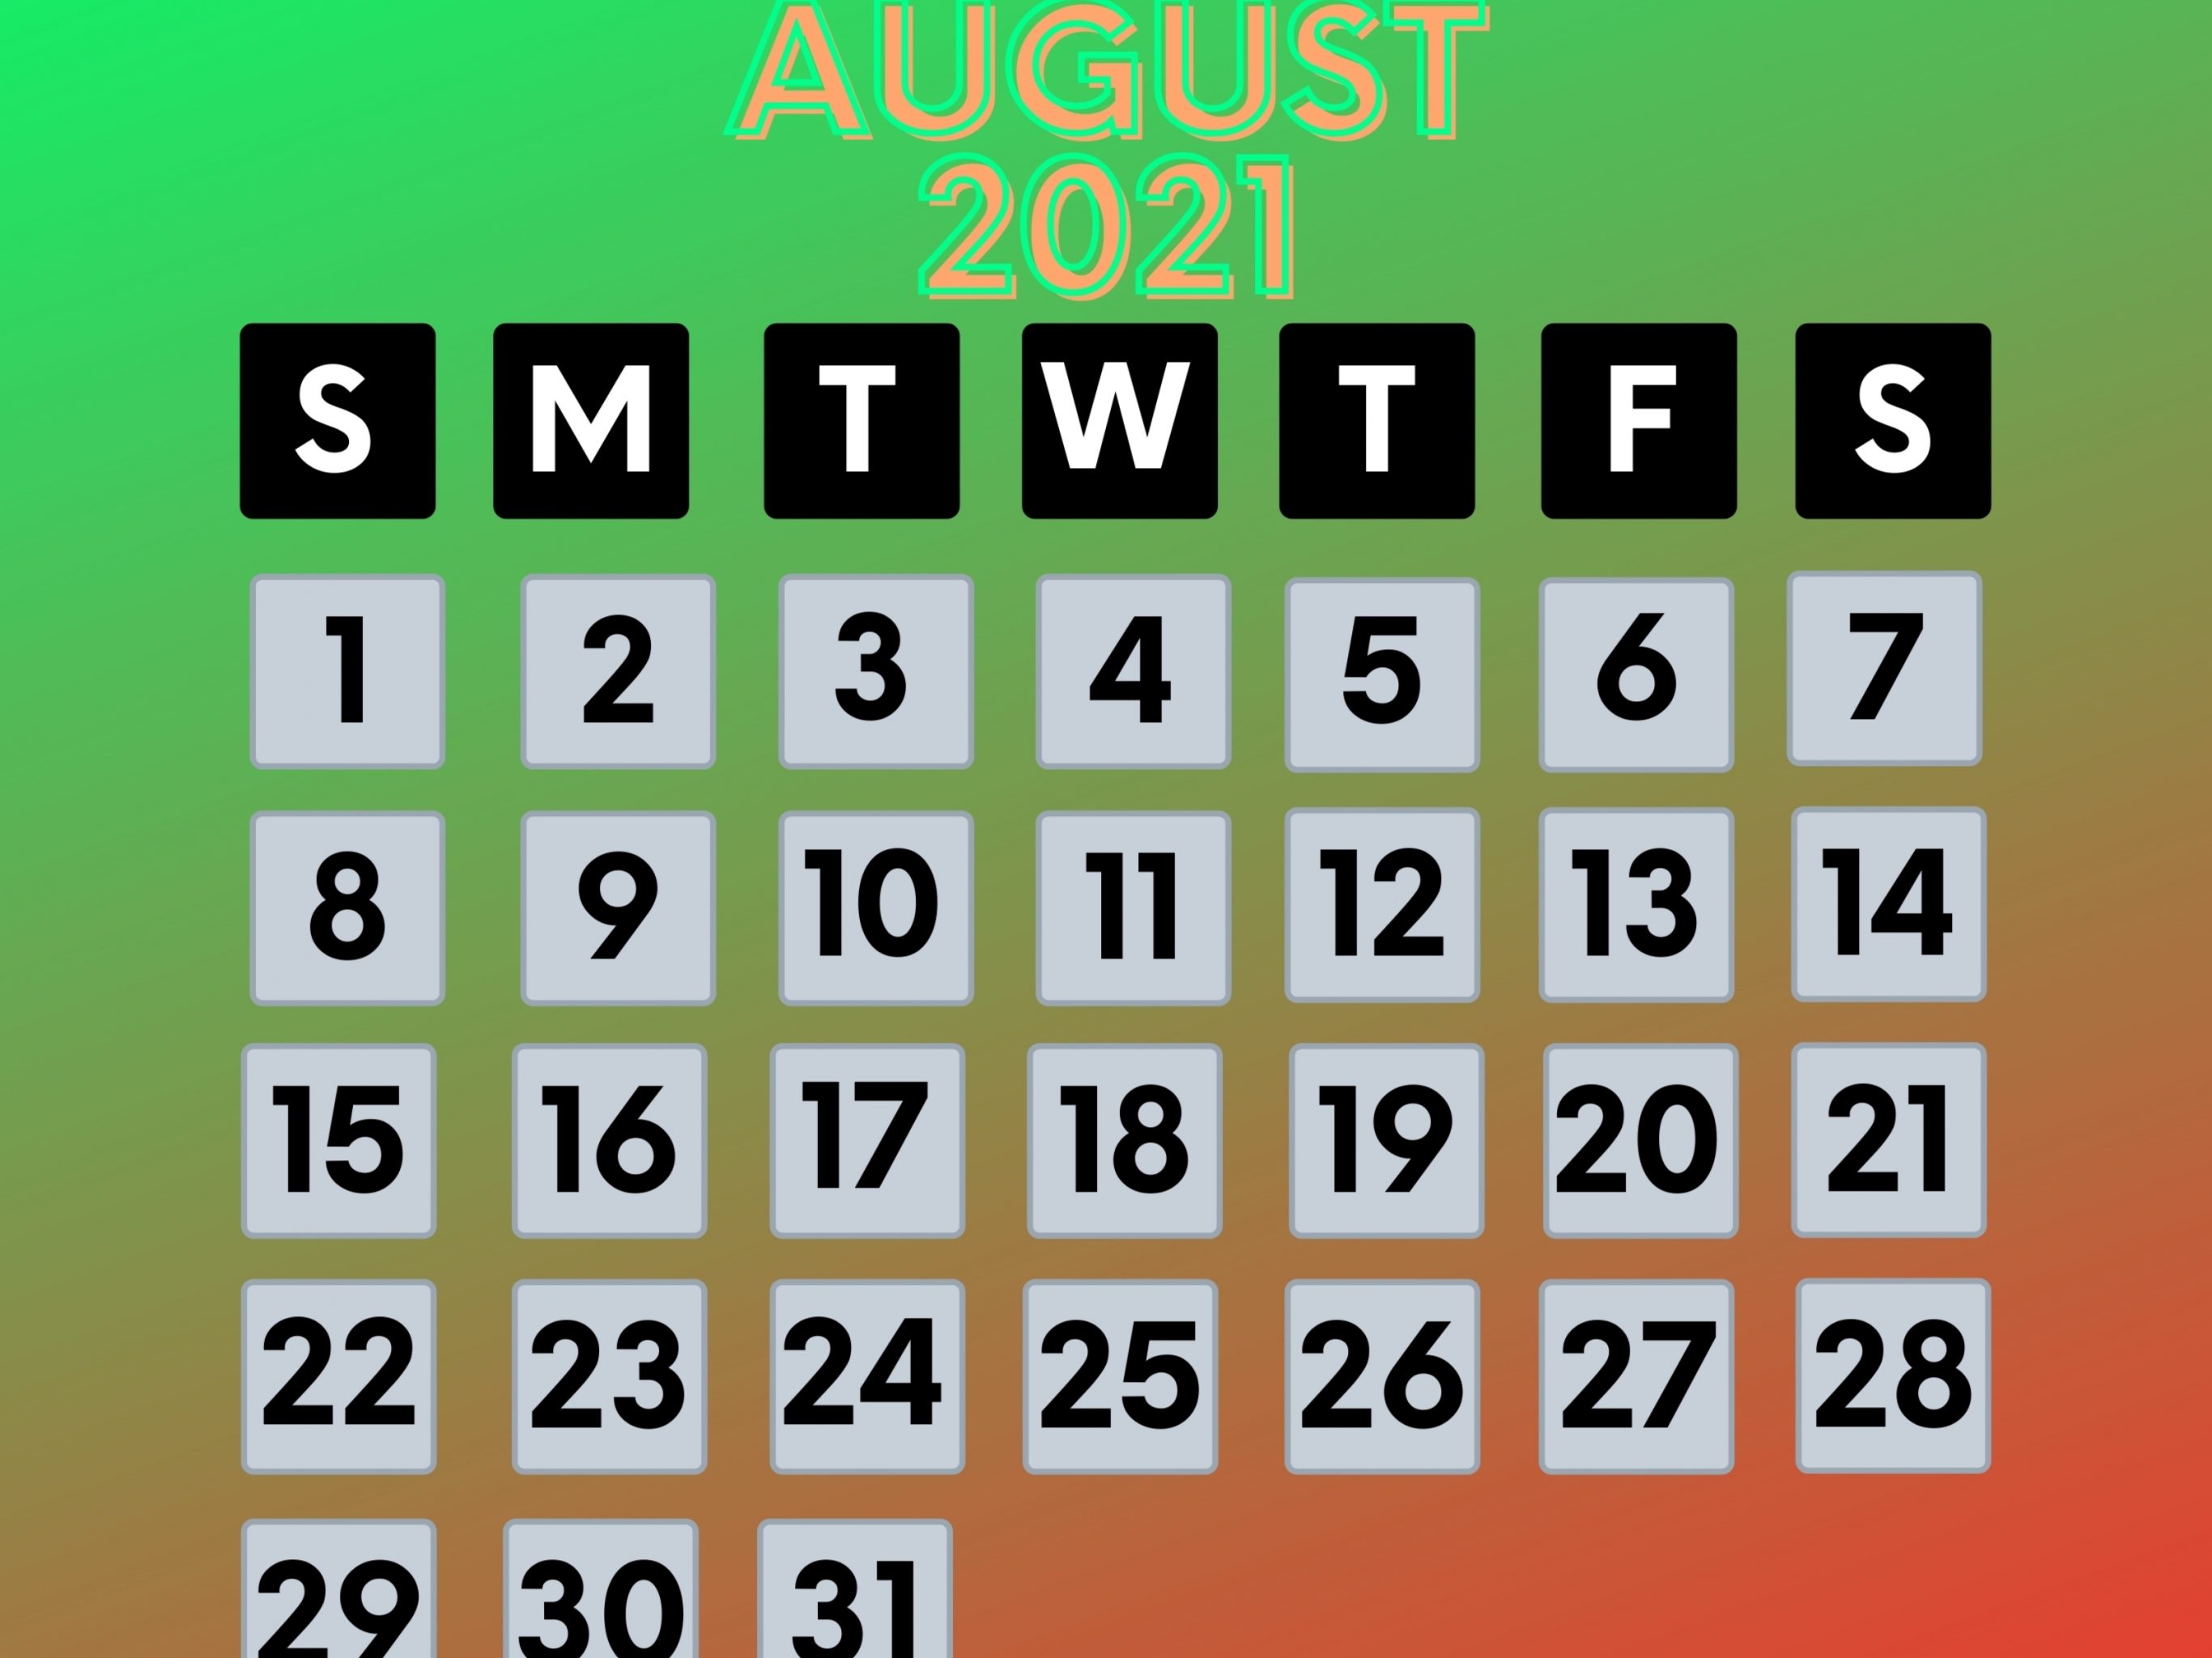 2732x2048 iPad air iPad Pro wallpapers August 2021 Calendar iPad Wallpaper 2732x2048 pixels resolution